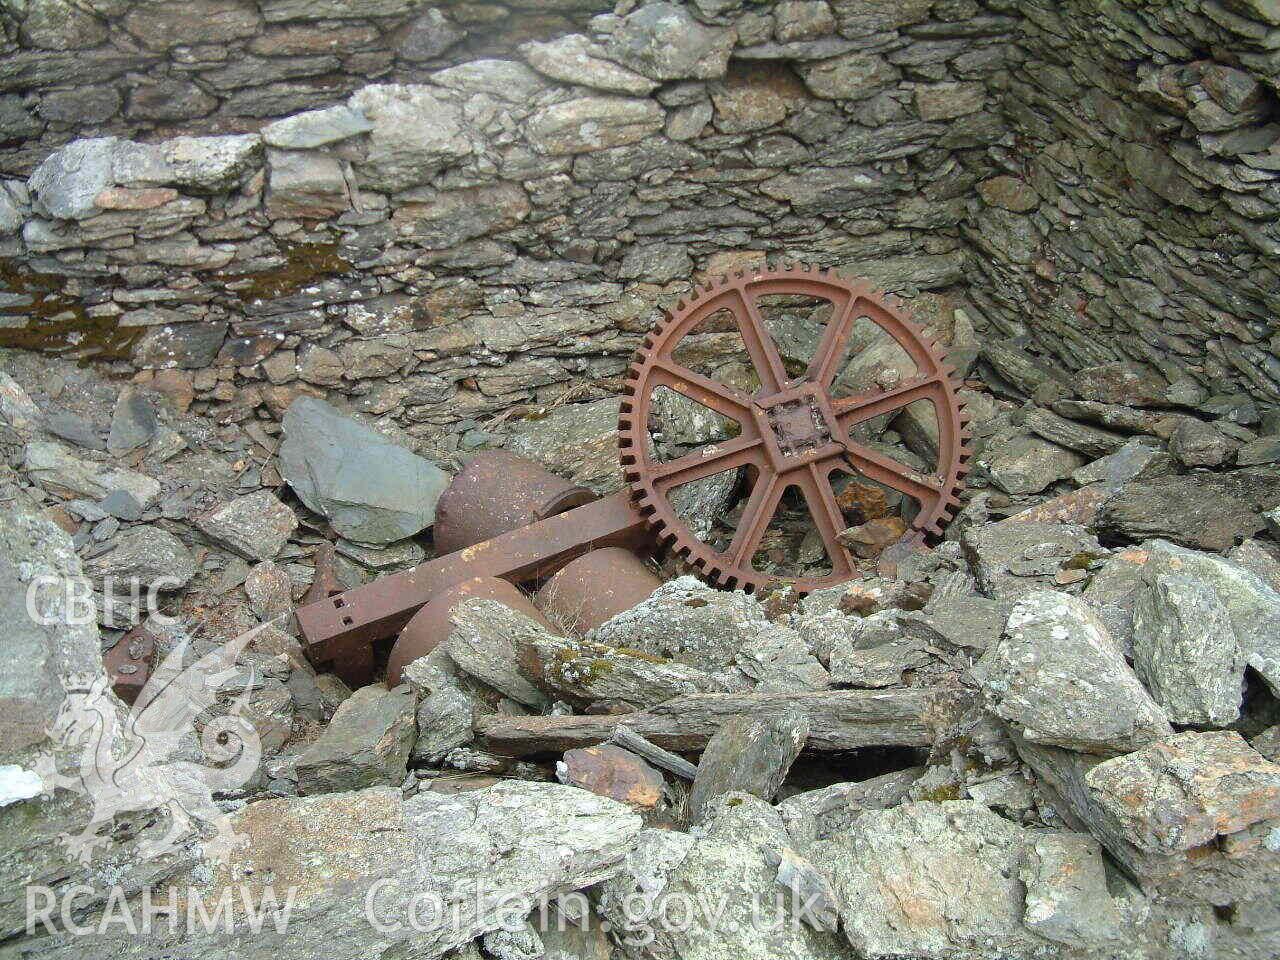 Photograph showing Cwm Erch Copper Mine - detail of machinery, taken by John Latham, 2003.